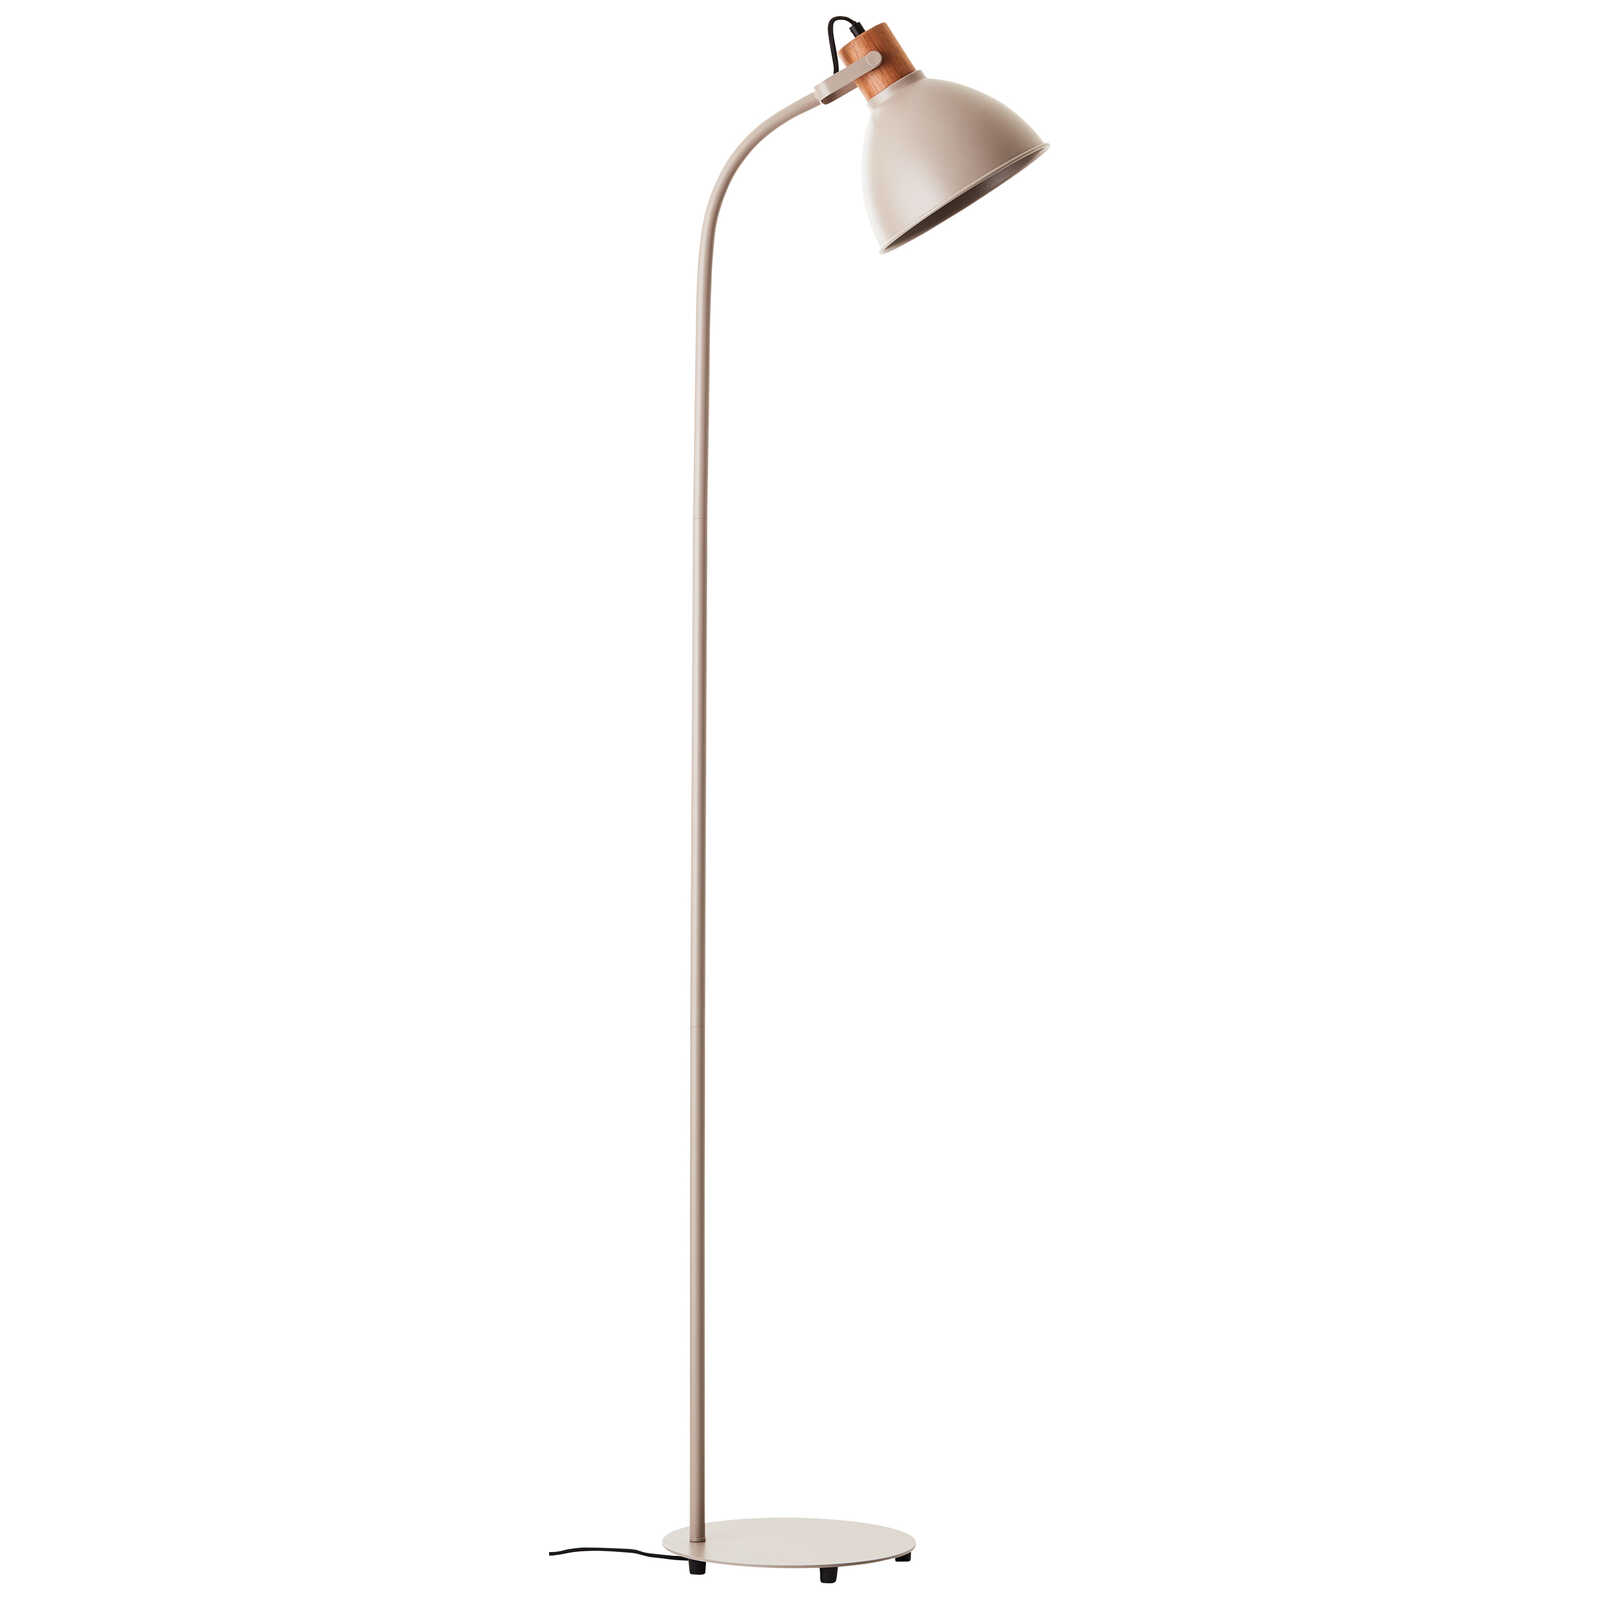             Wooden floor lamp - Franziska 8 - Grey
        